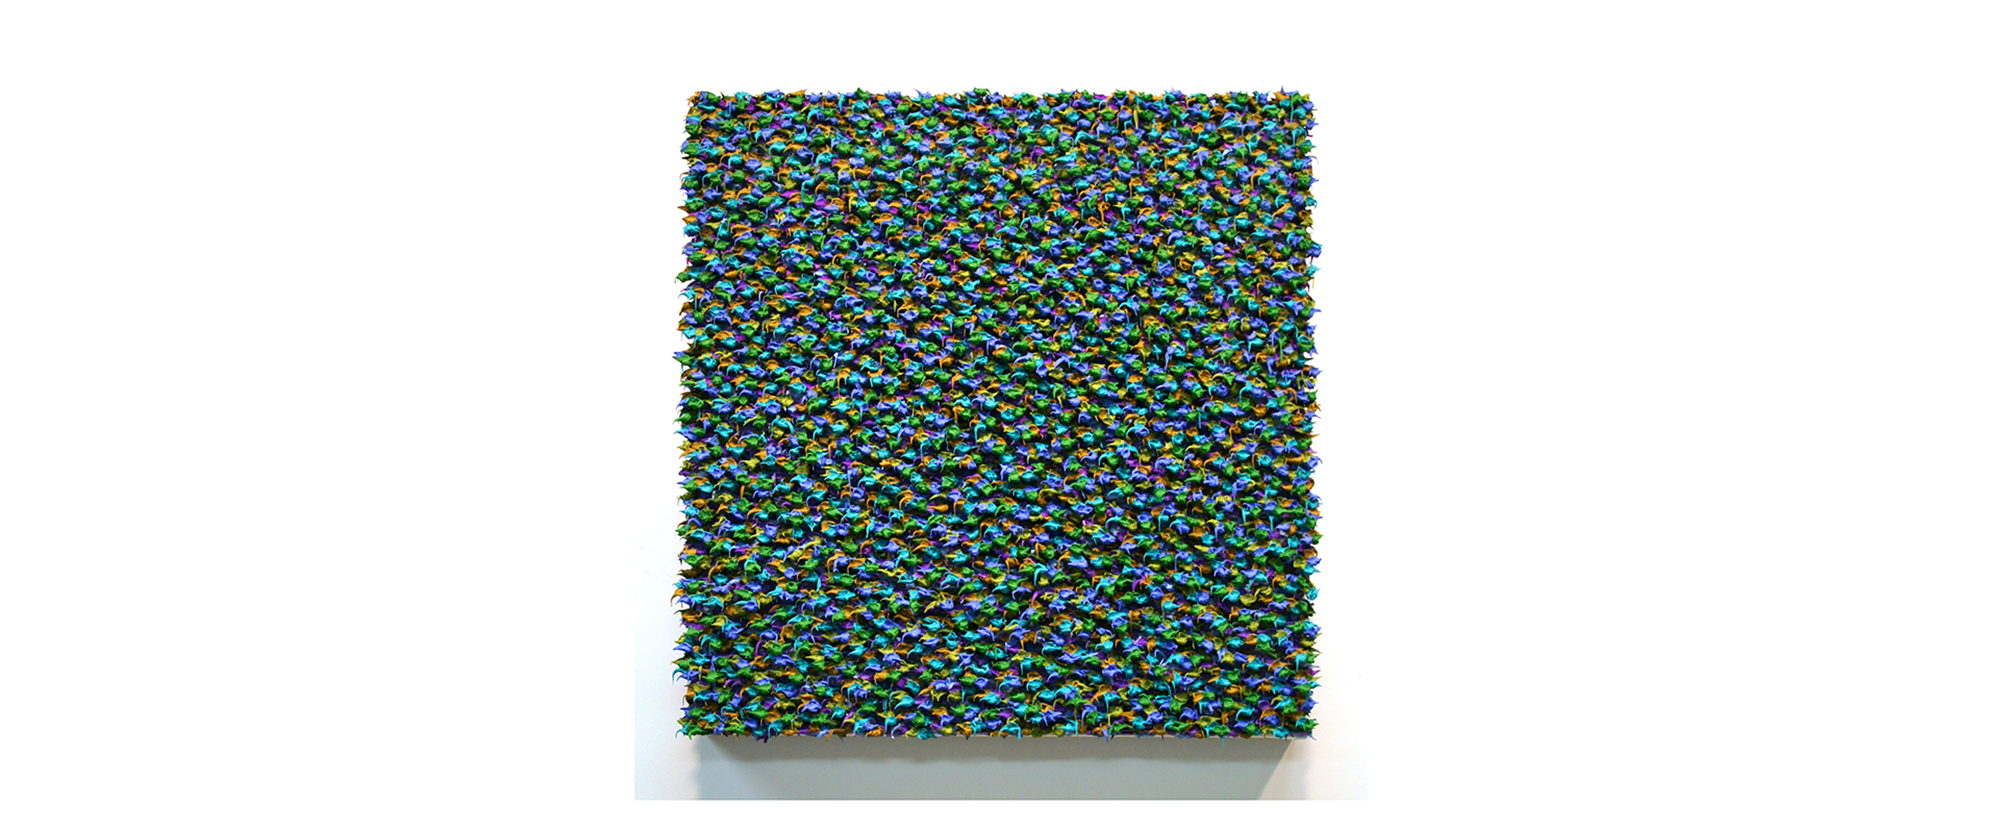 "6,428" - 2010, Öl auf Leinwand, 67 x 65 cm